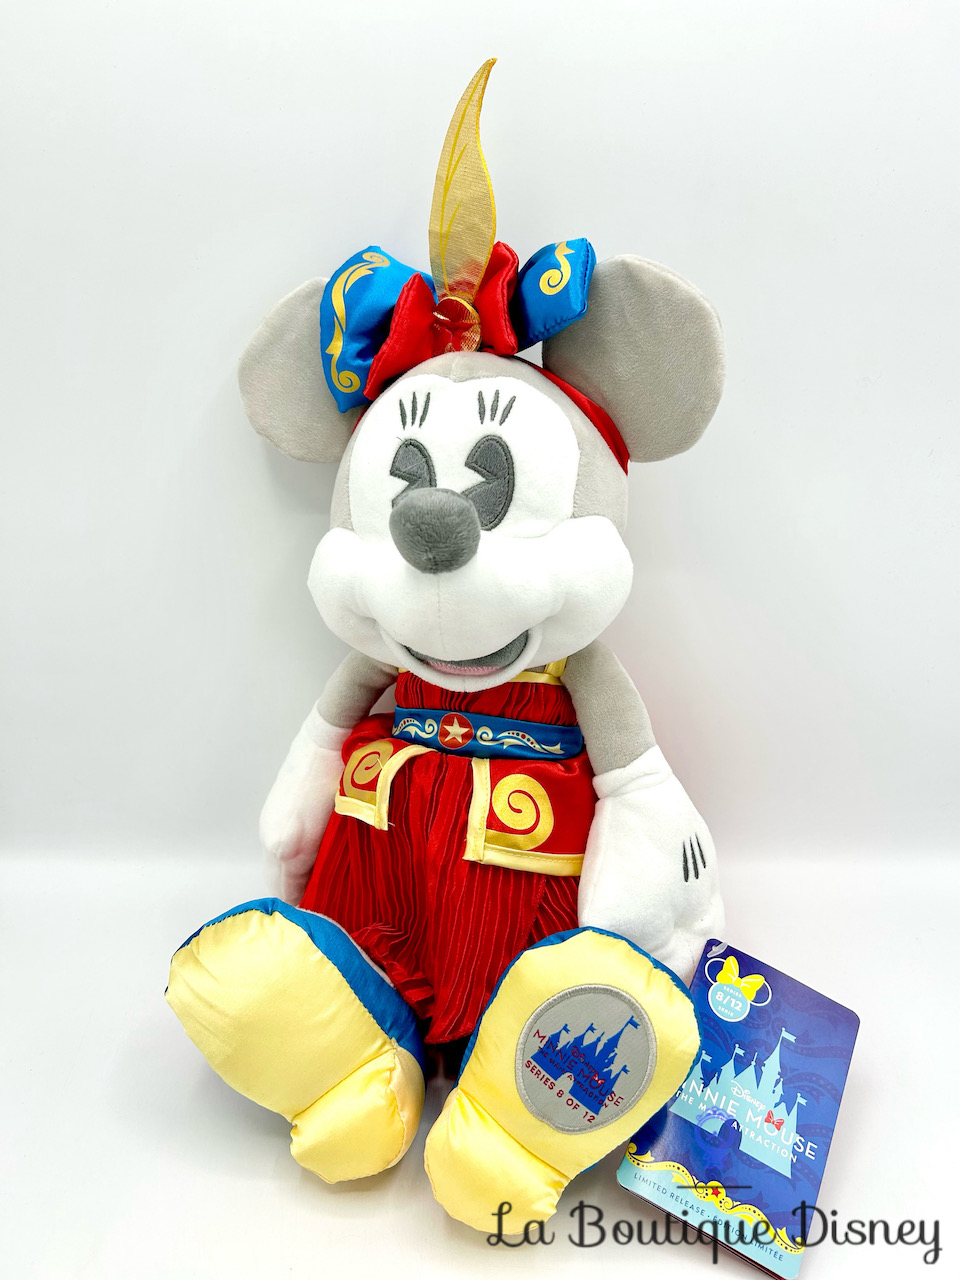 Peluche Minnie Mouse The Main Attraction 8 sur 12 Dumbo The Flying Elephant Disney Store 2020 Édition limitée 43 cm